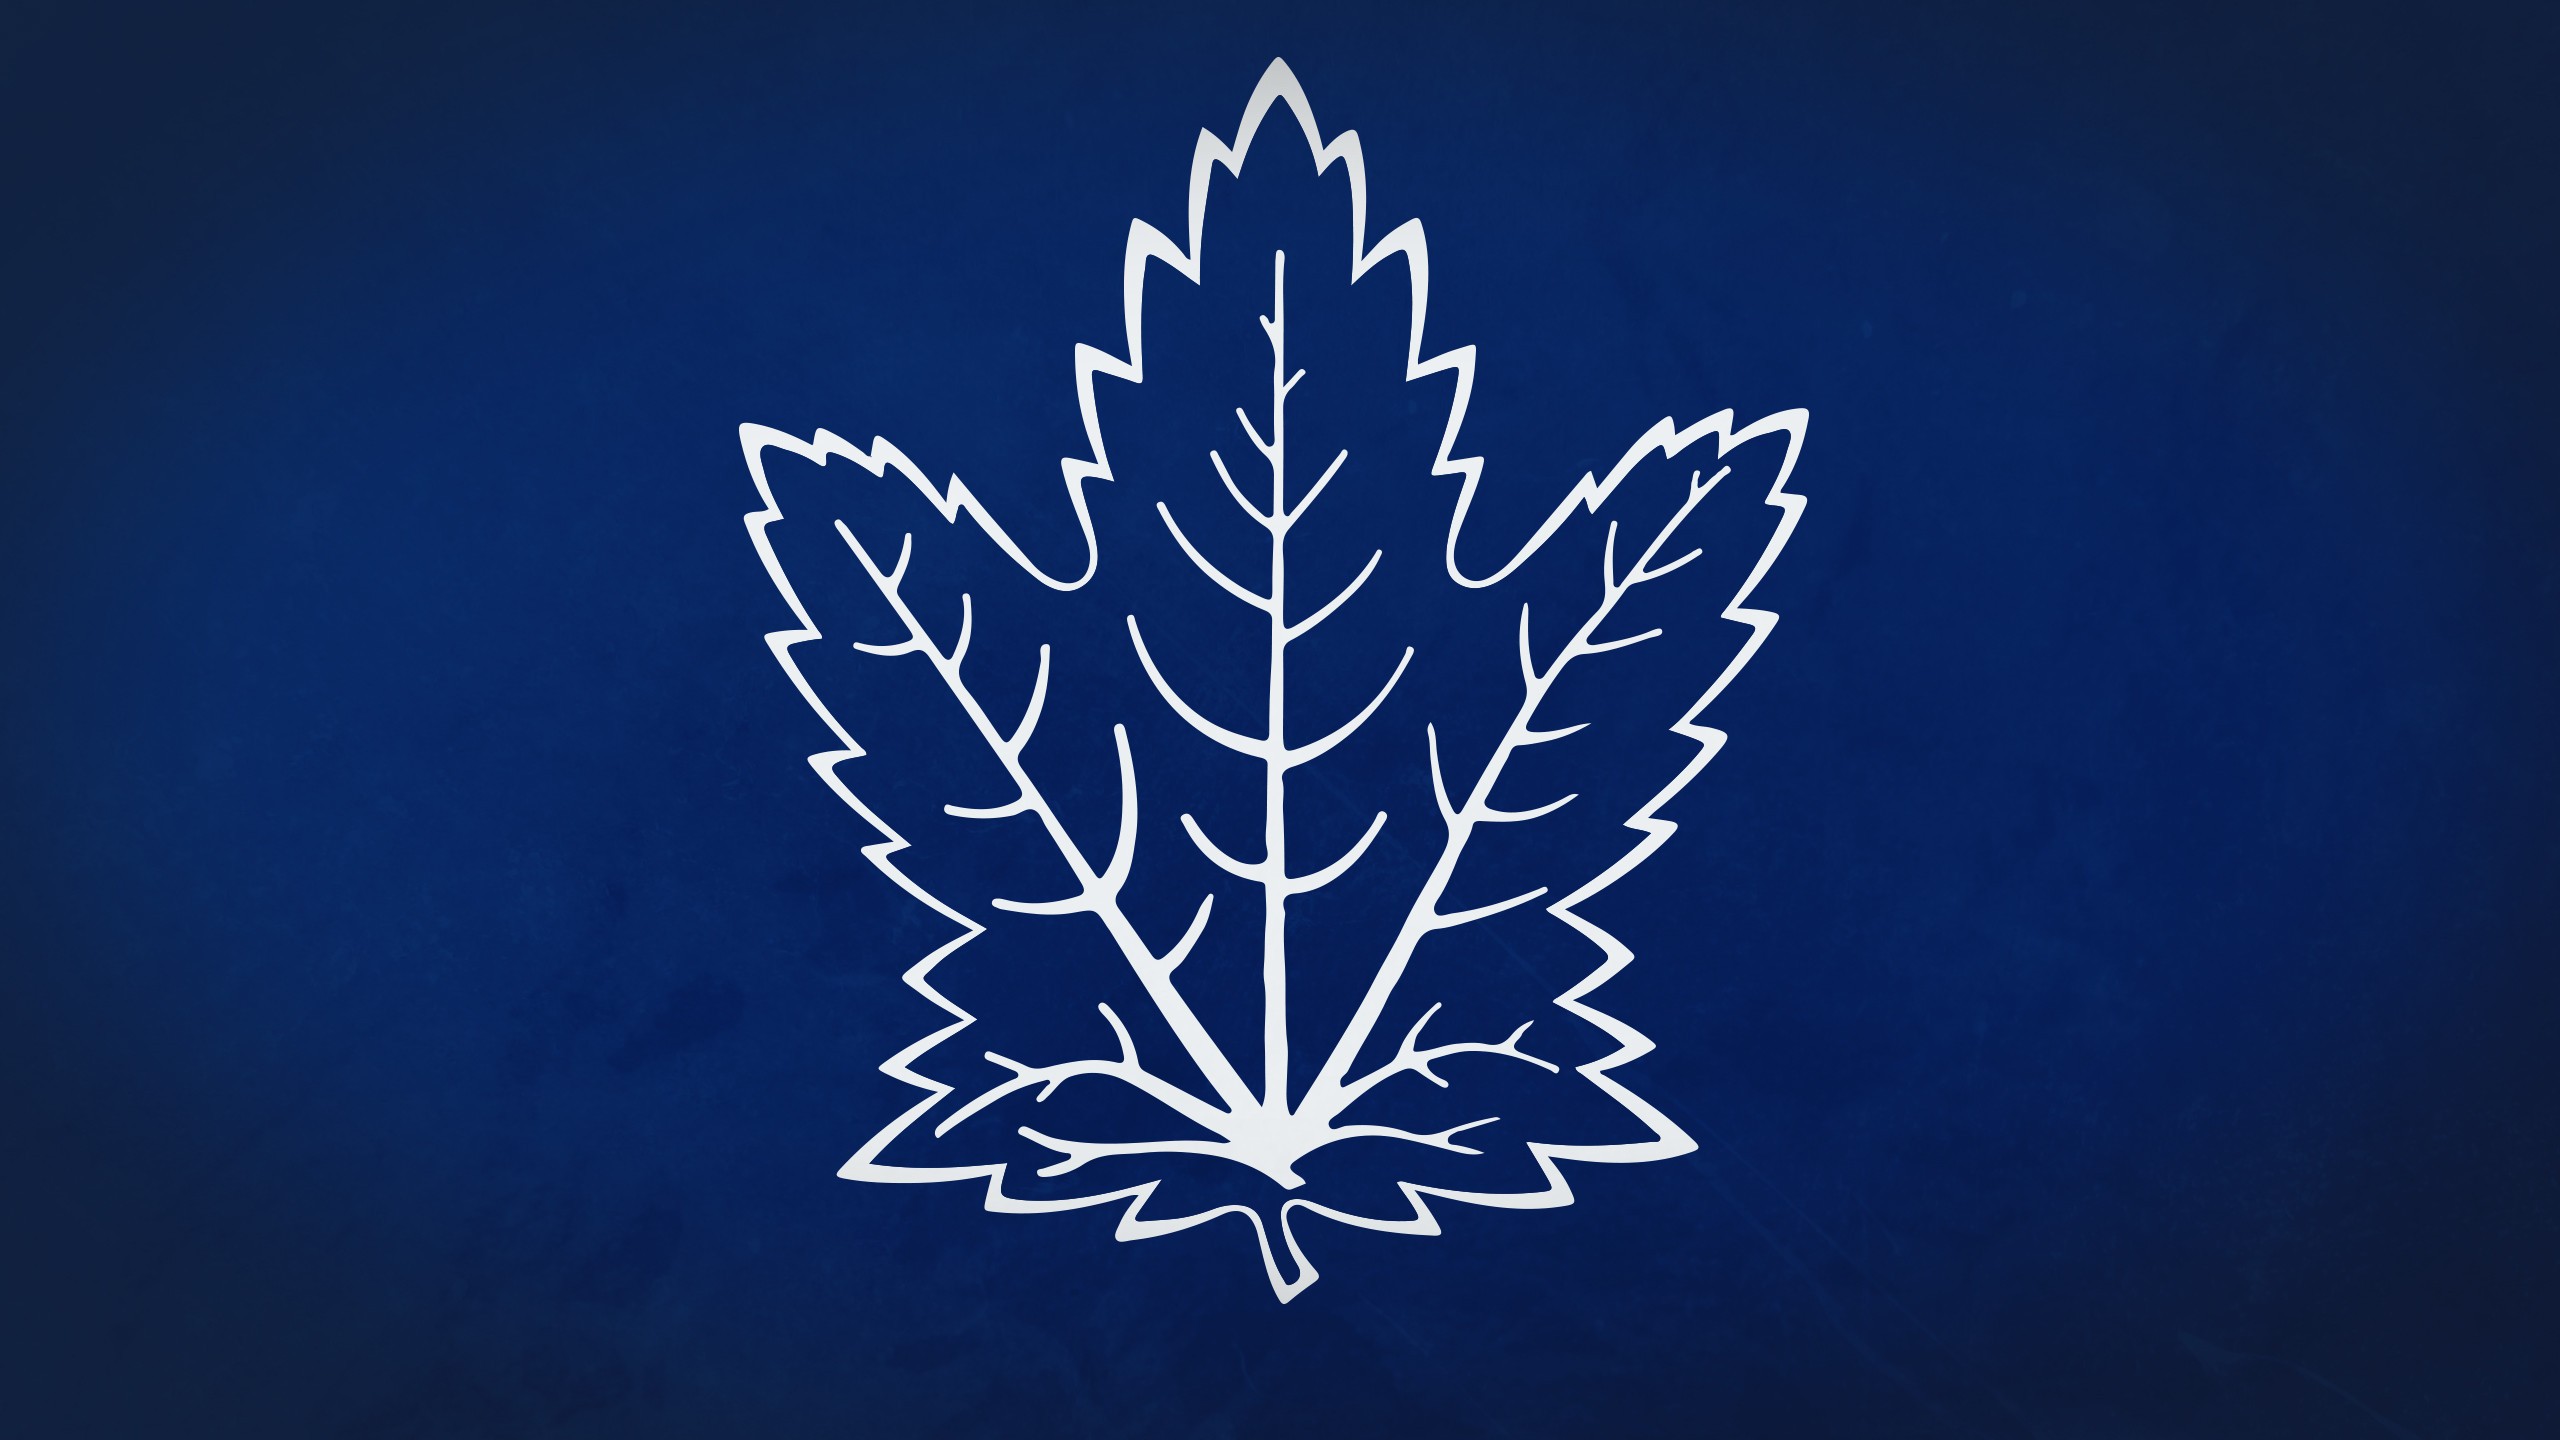 Toronto maple leafs ipad wallpaper For Desktop 7